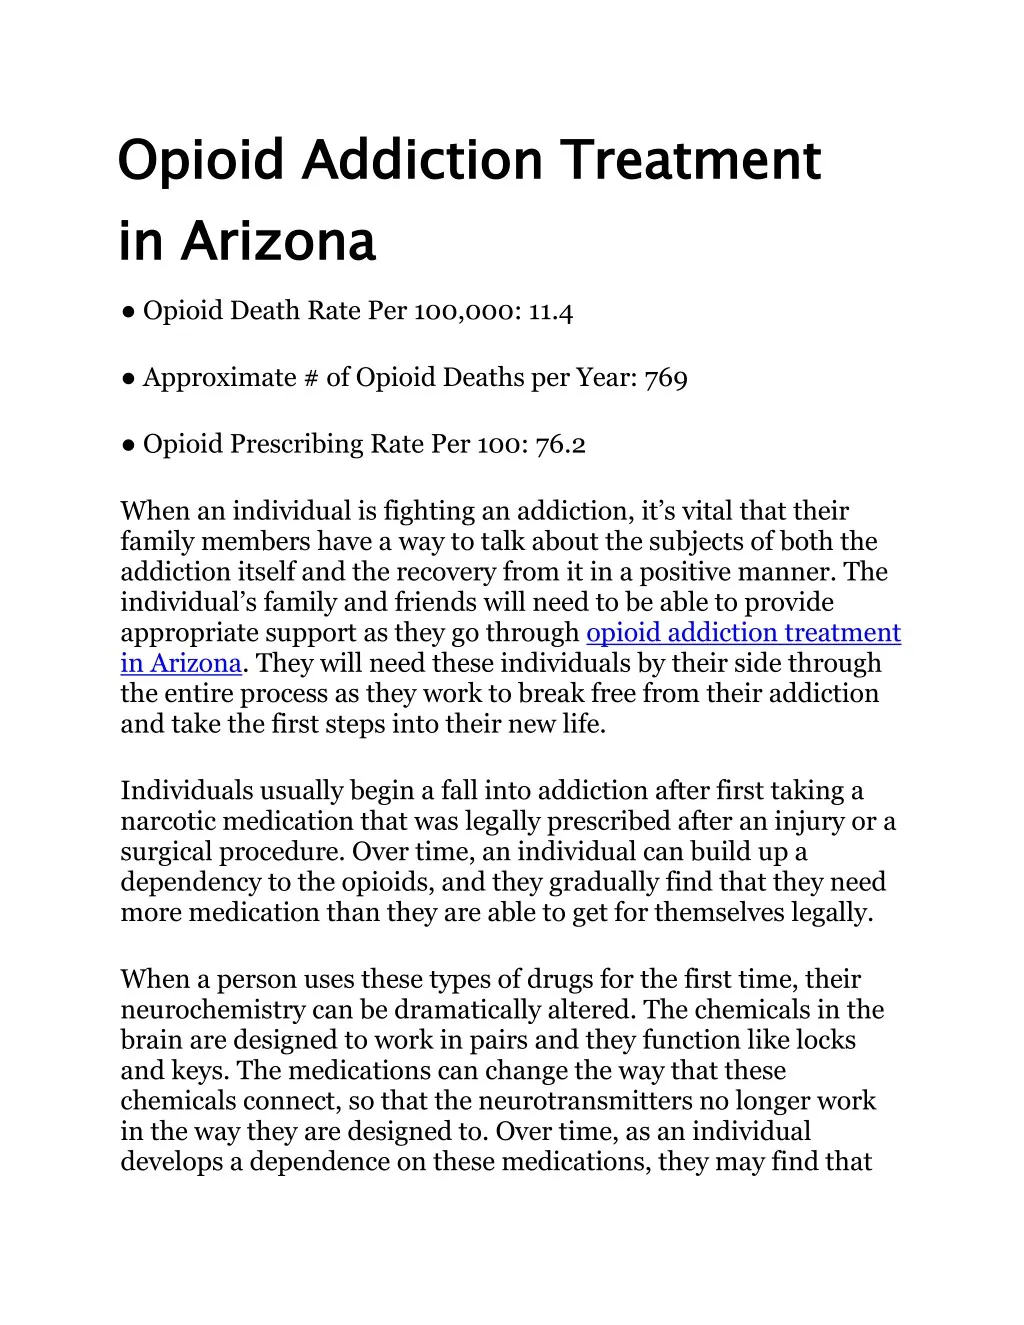 opioid addiction treatment in opioid death rate